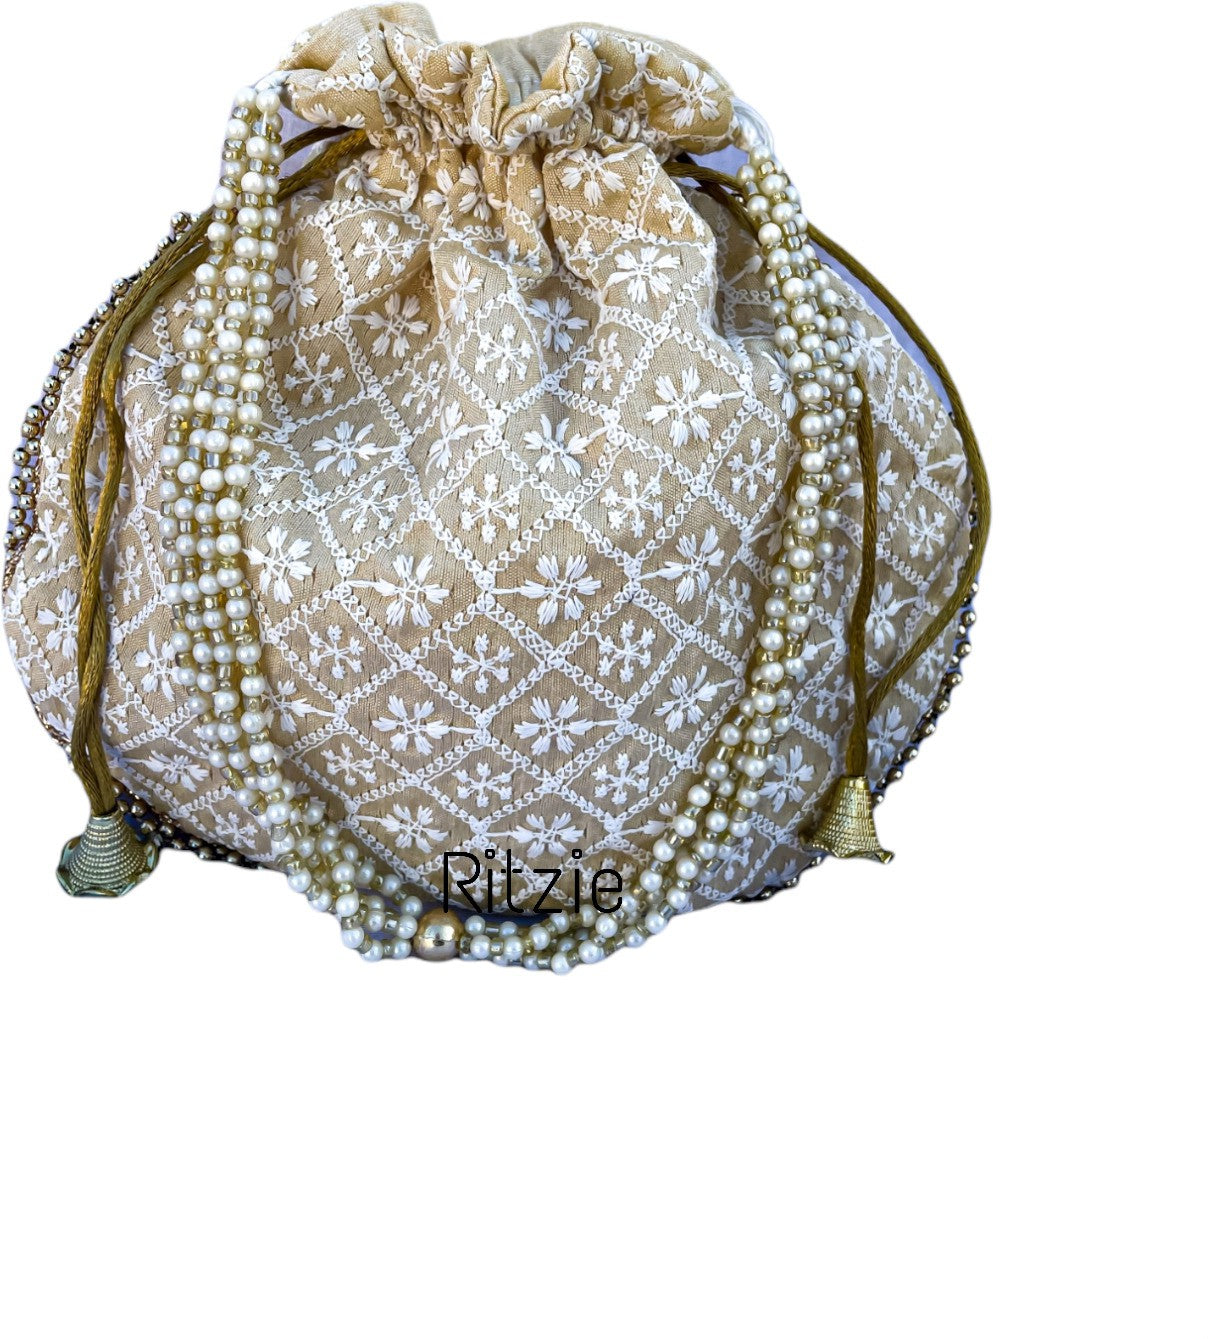 Women's Chickenkari Embroidered Design Potli    Wedding Wristlets - Ritzie